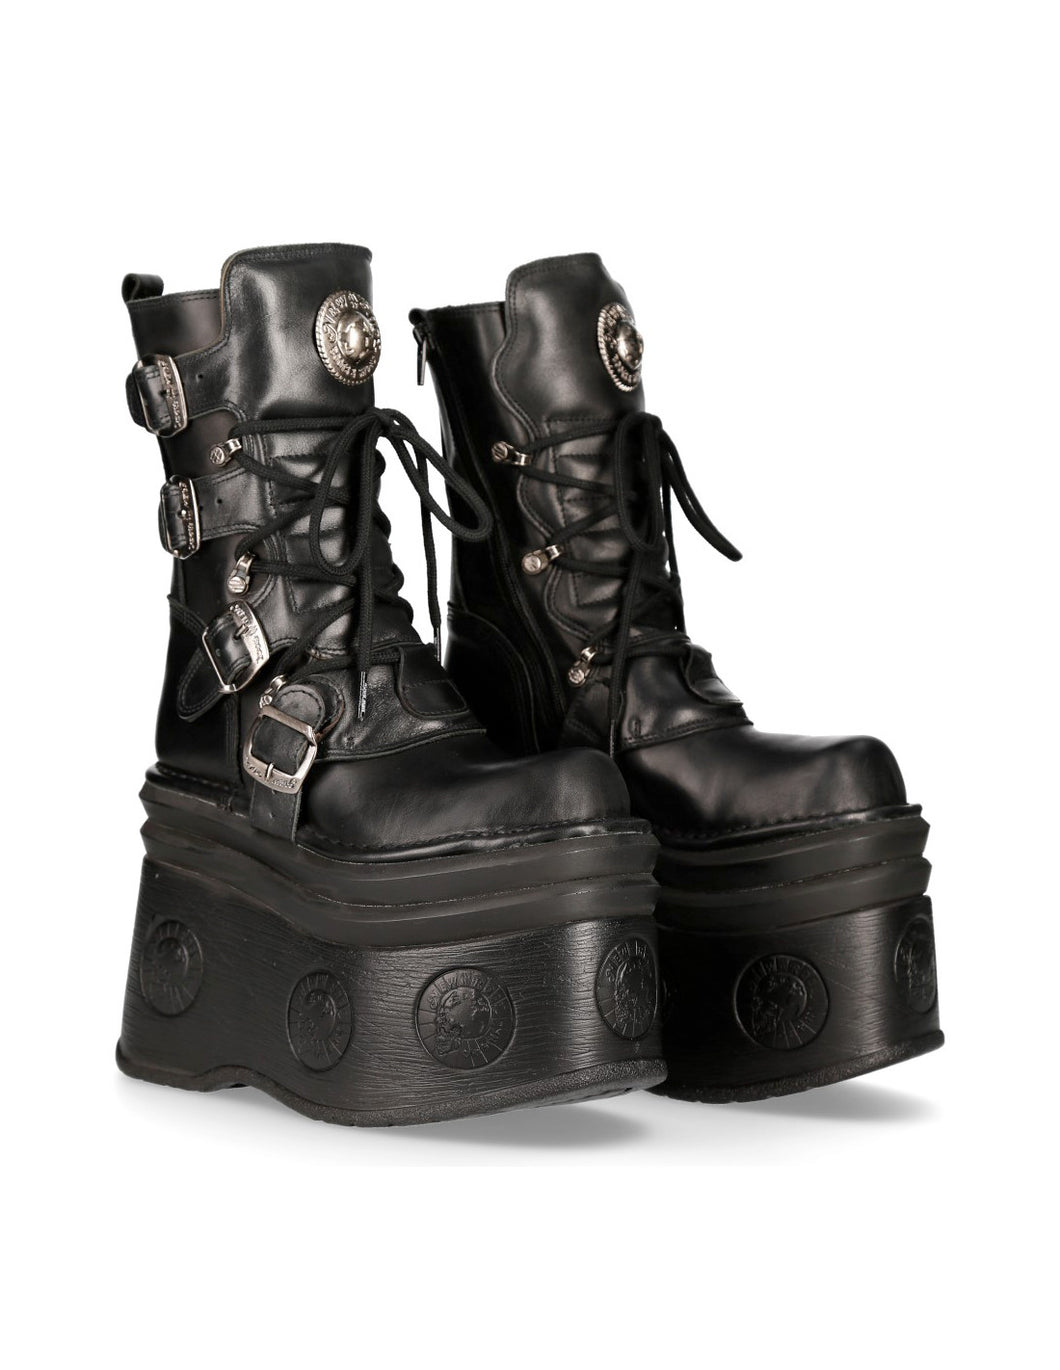 New Rock Boots Schuhe Plateau Schwarz Echtleder M-373-C105 Made in Spain